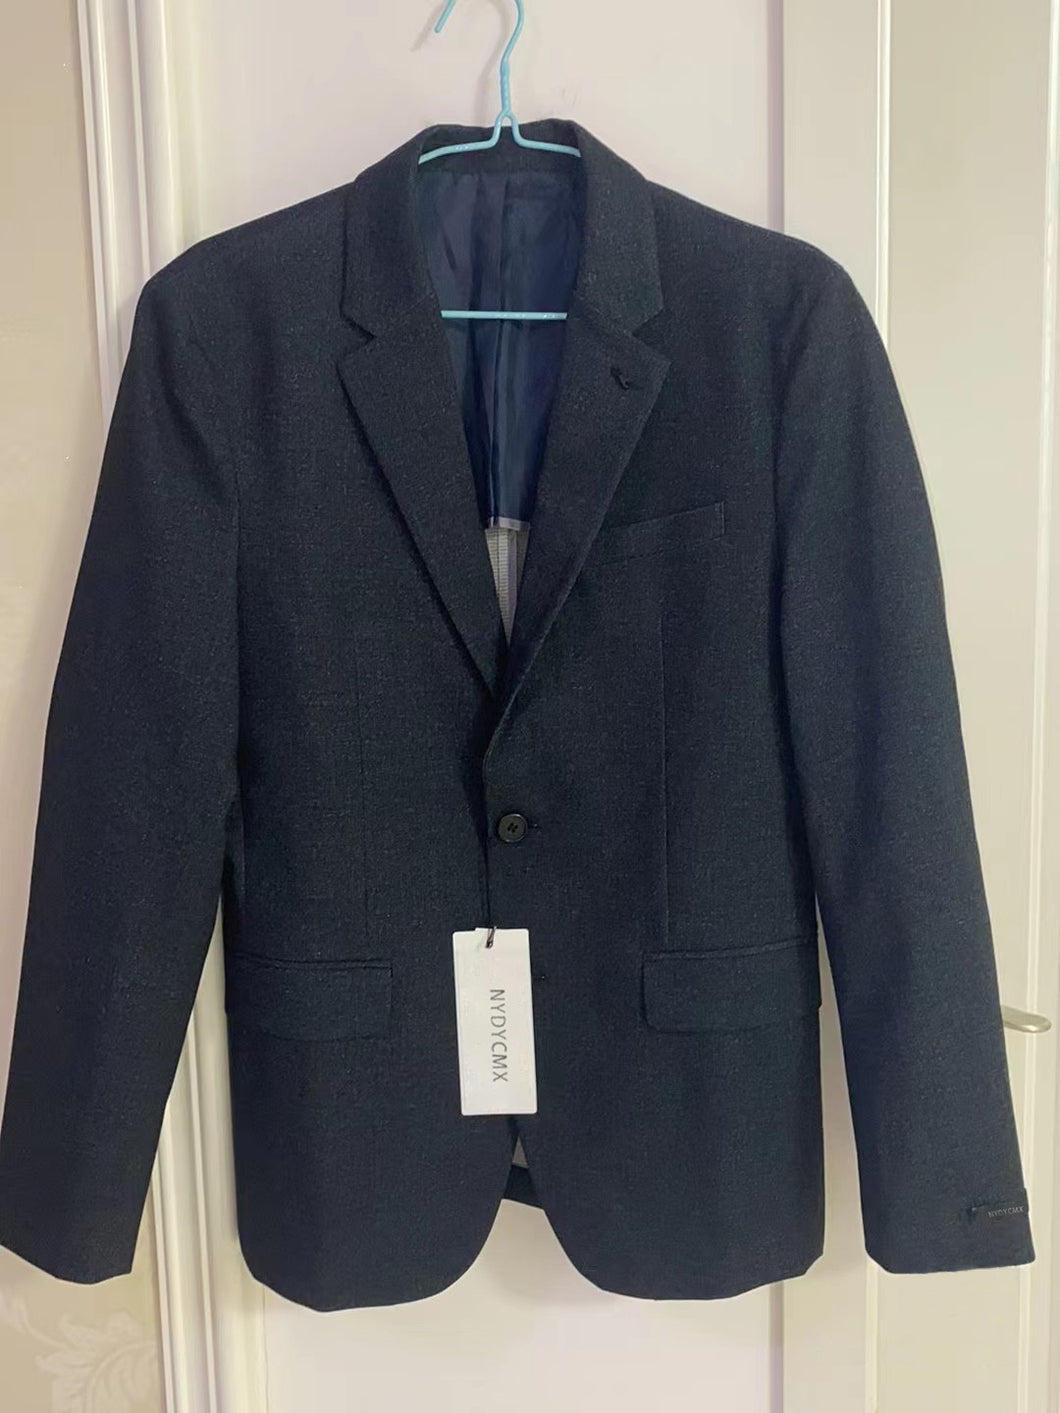 NYDYCMX Men's suits,Lapel Pocket Blazer Suit Long Sleeve Buttons